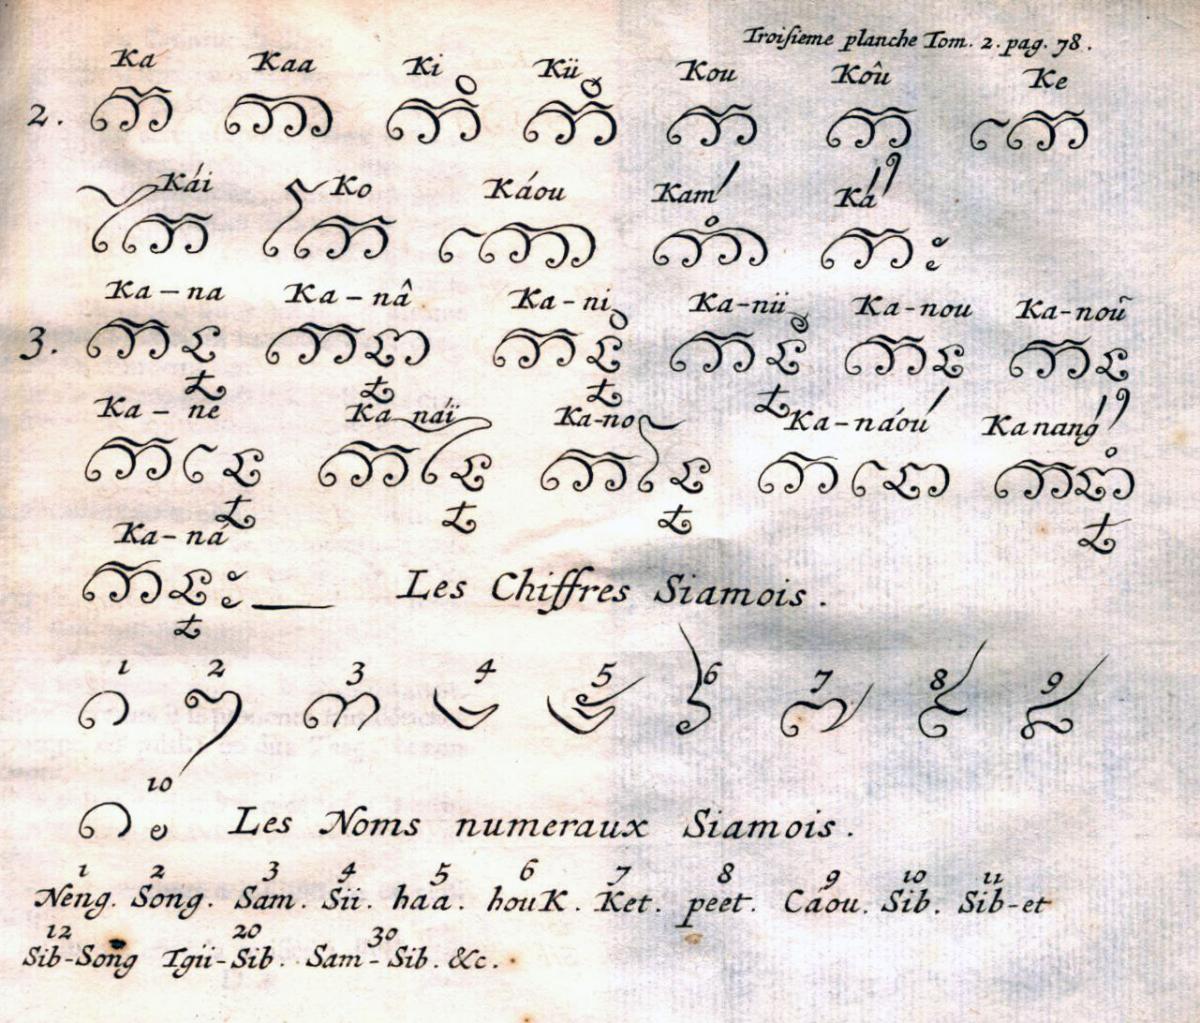 The Bali alphabets and Siamese numerals.